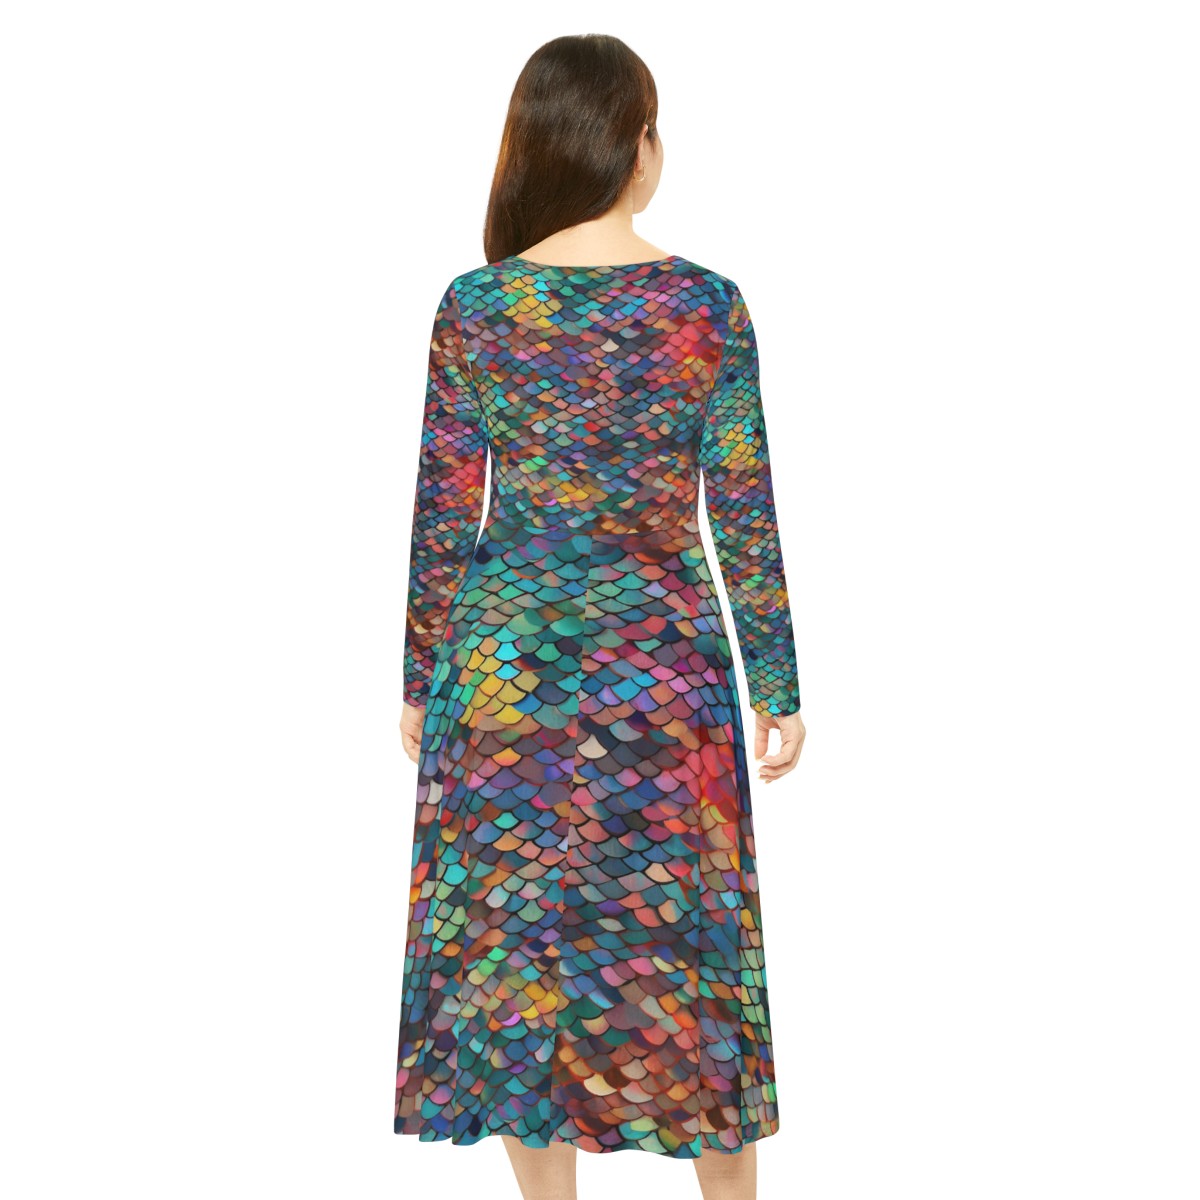 Rainbow Mermaid Scales - Women's Long Sleeve Dance Dress (AOP) product thumbnail image